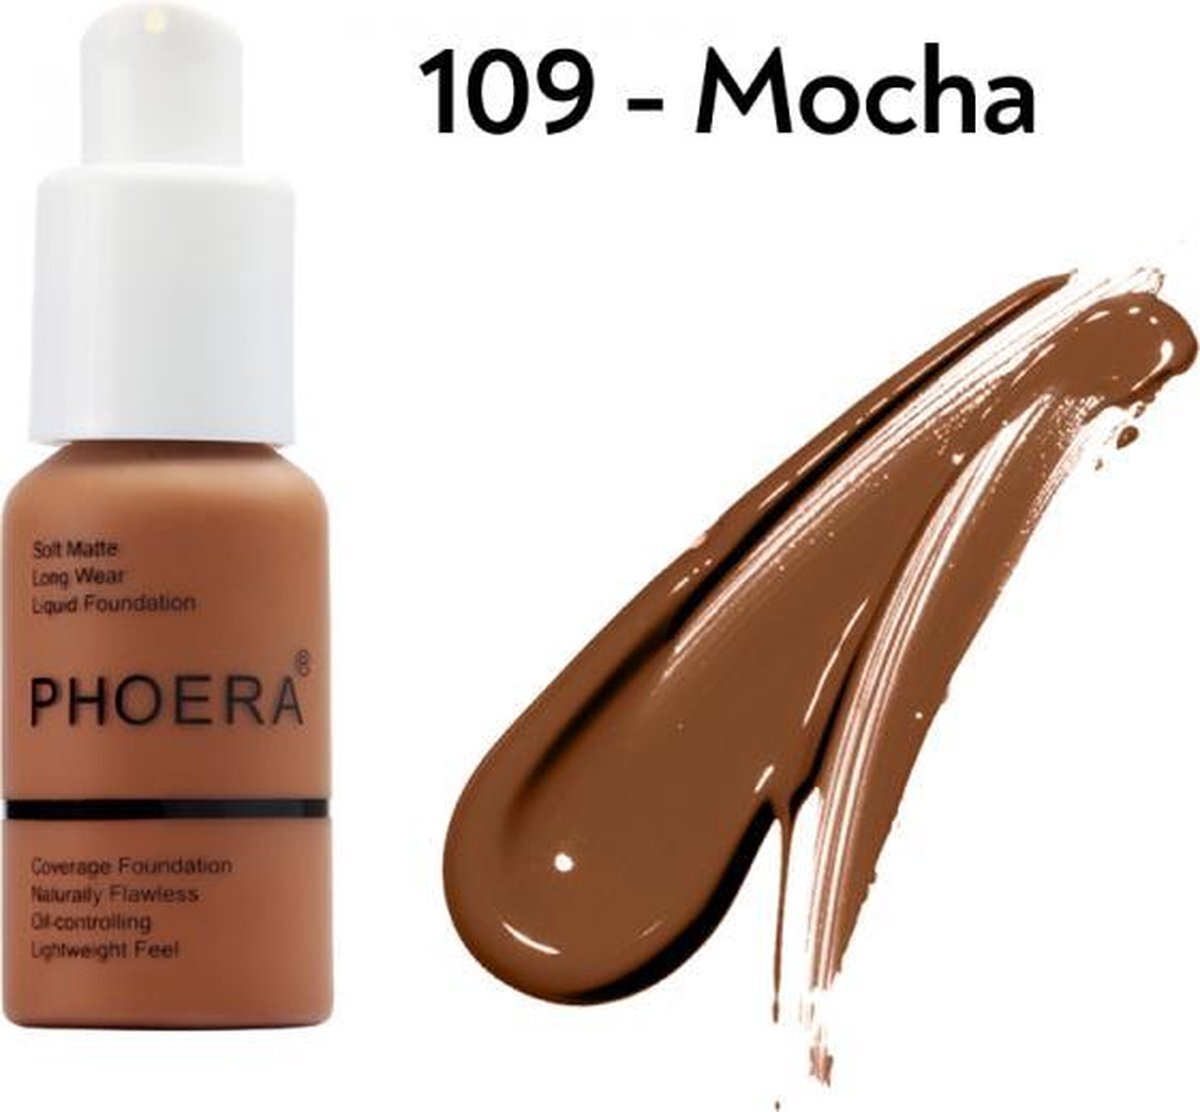 Phoera mocha 109 - FOUNDATION™ - Soft Matte Full Coverage Liquid Foundation